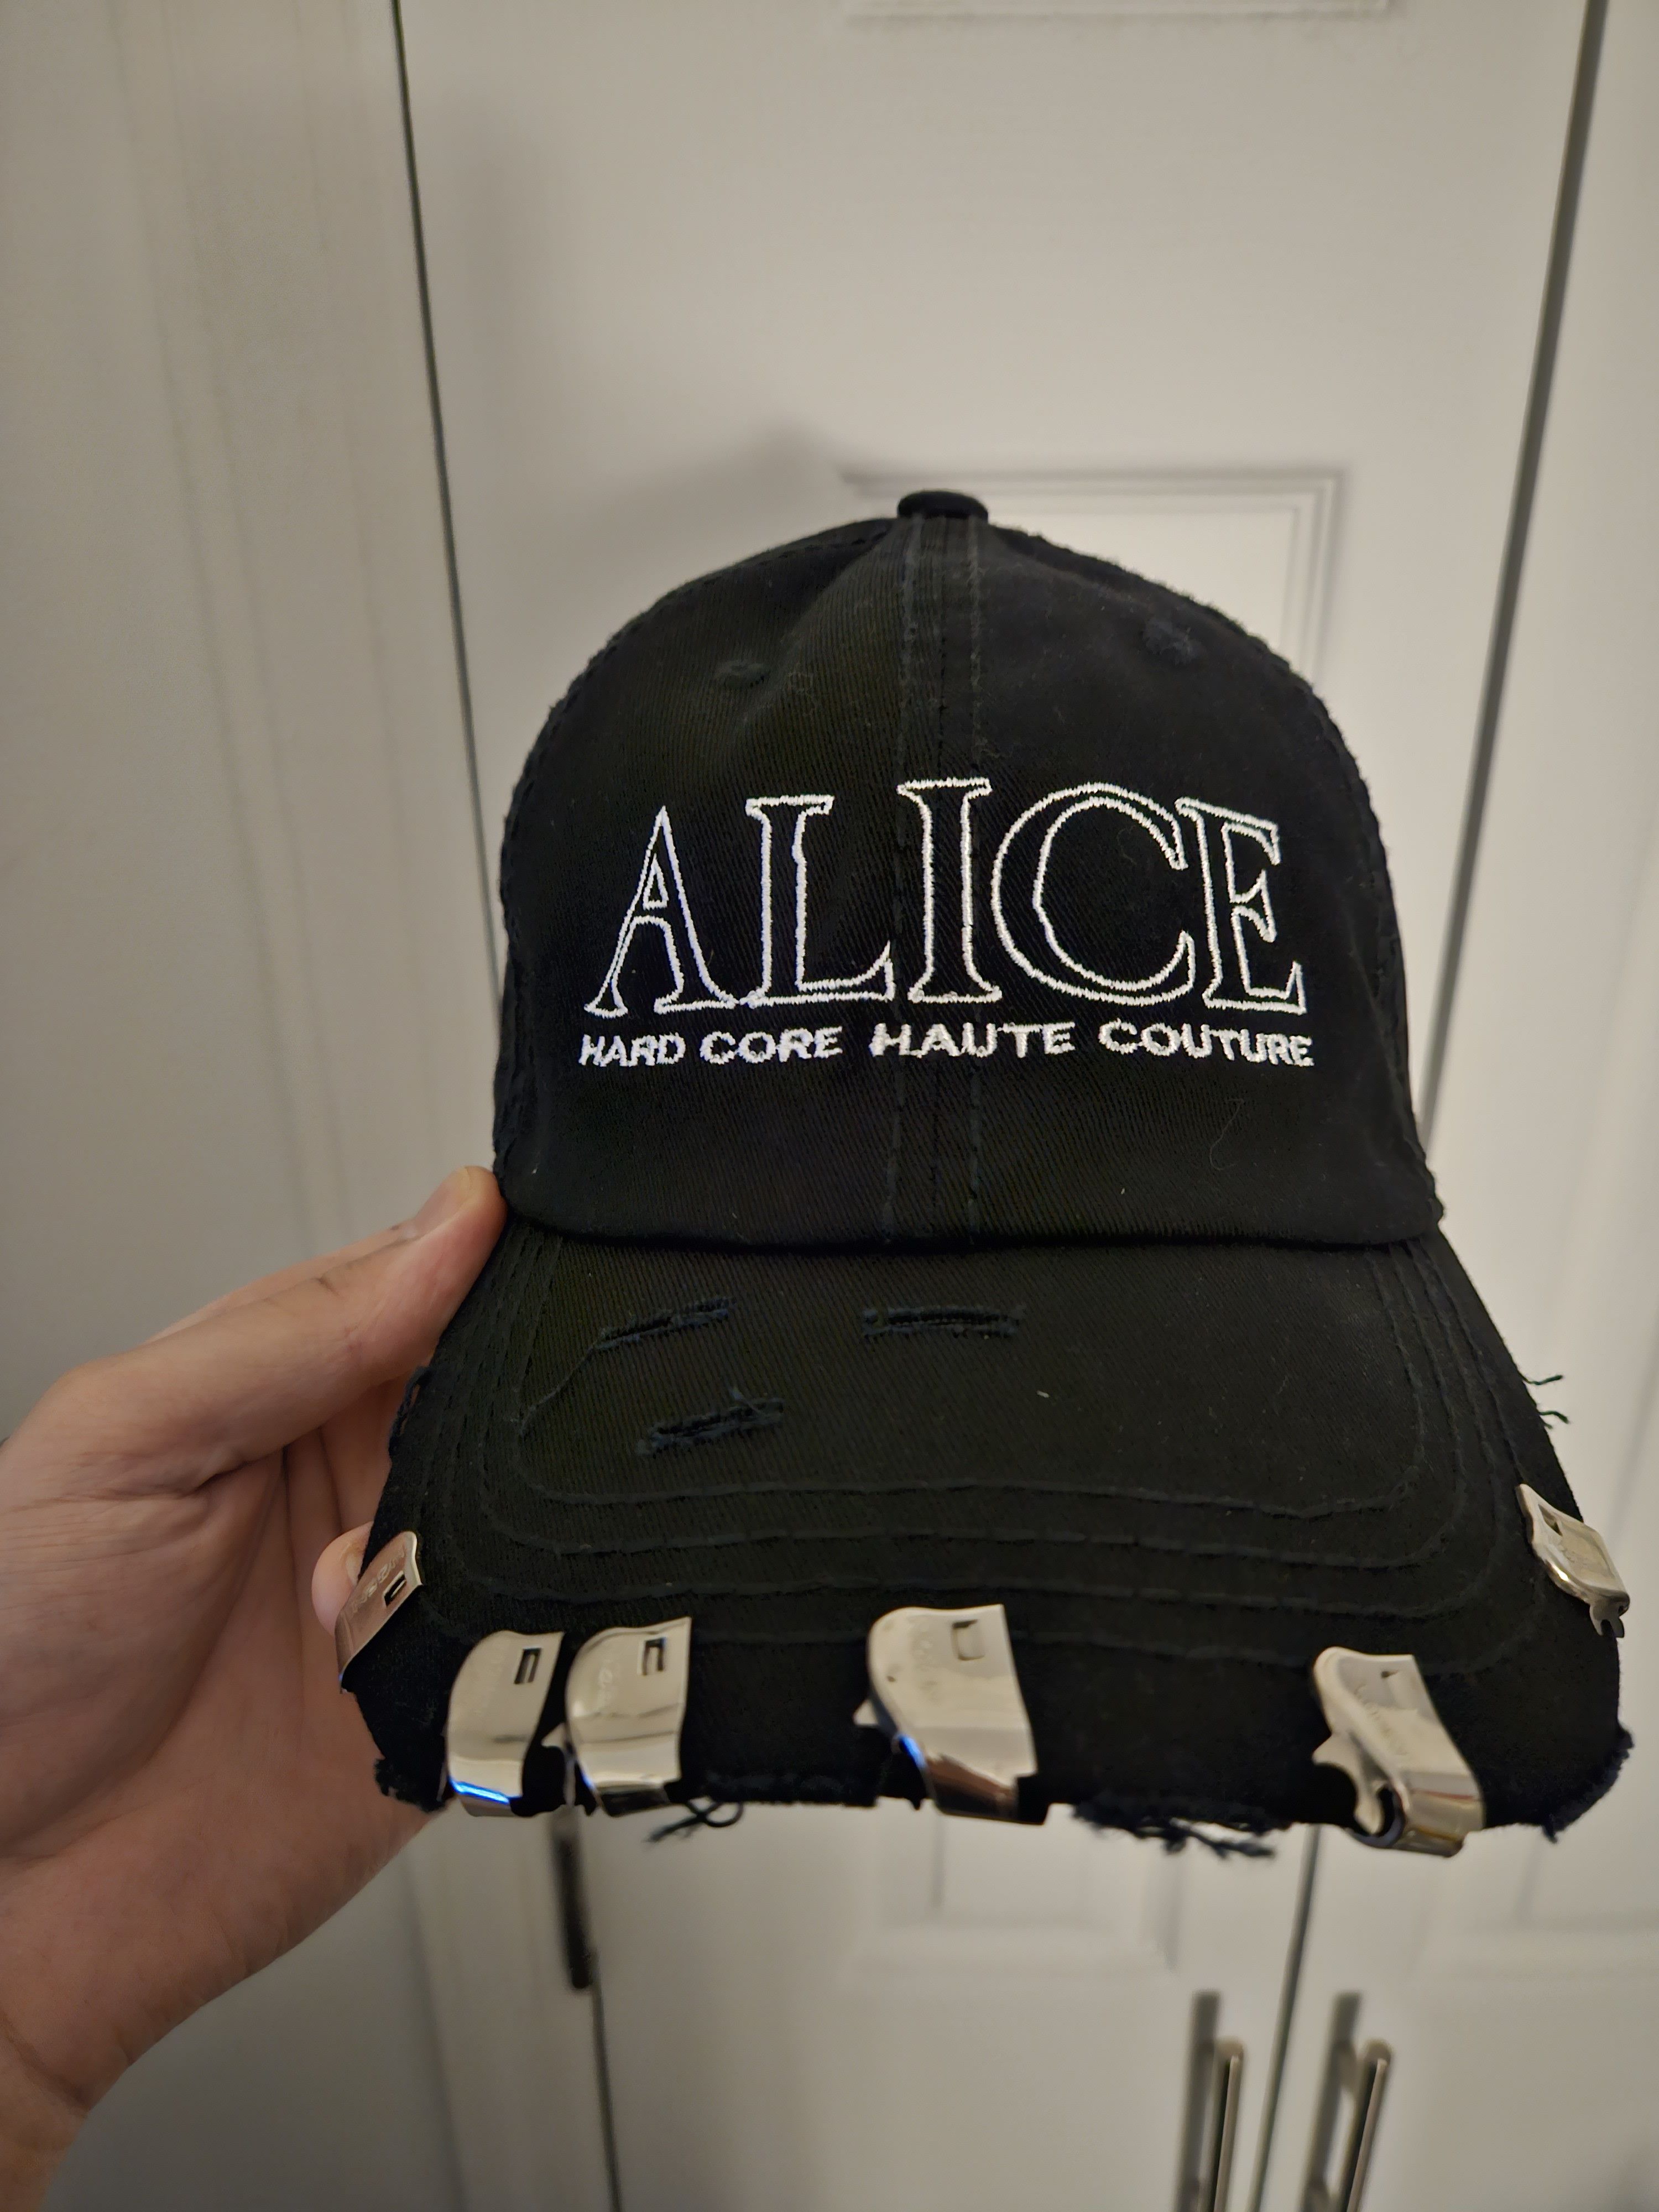 Alice Hollywood Atelier logo cap | Grailed